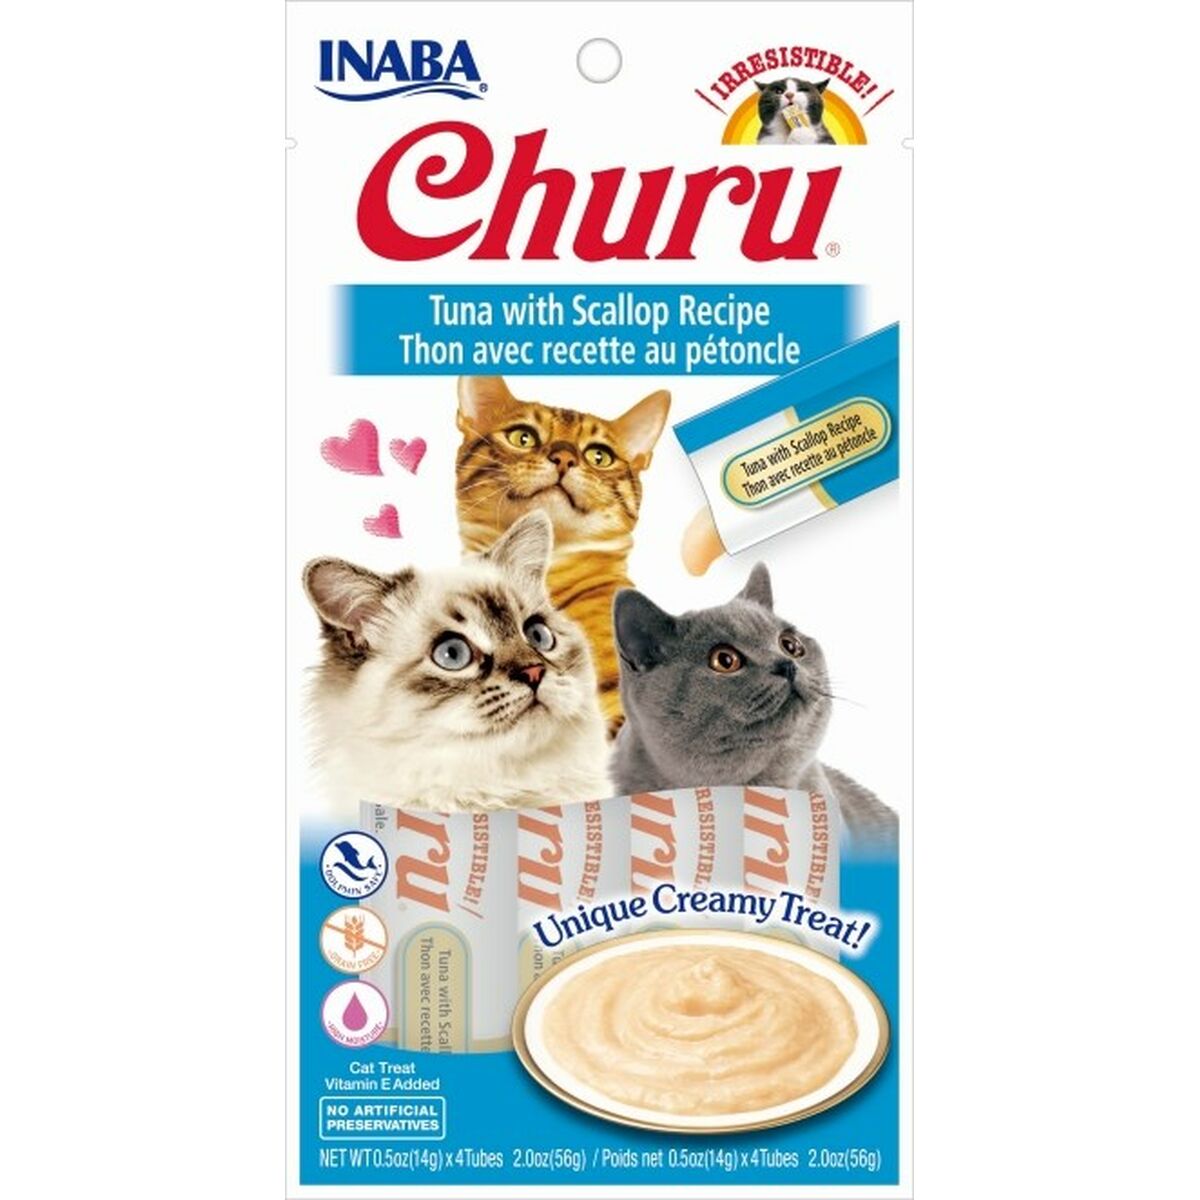 Snack for Cats Inaba Churu 4 x 14 g Tonijn